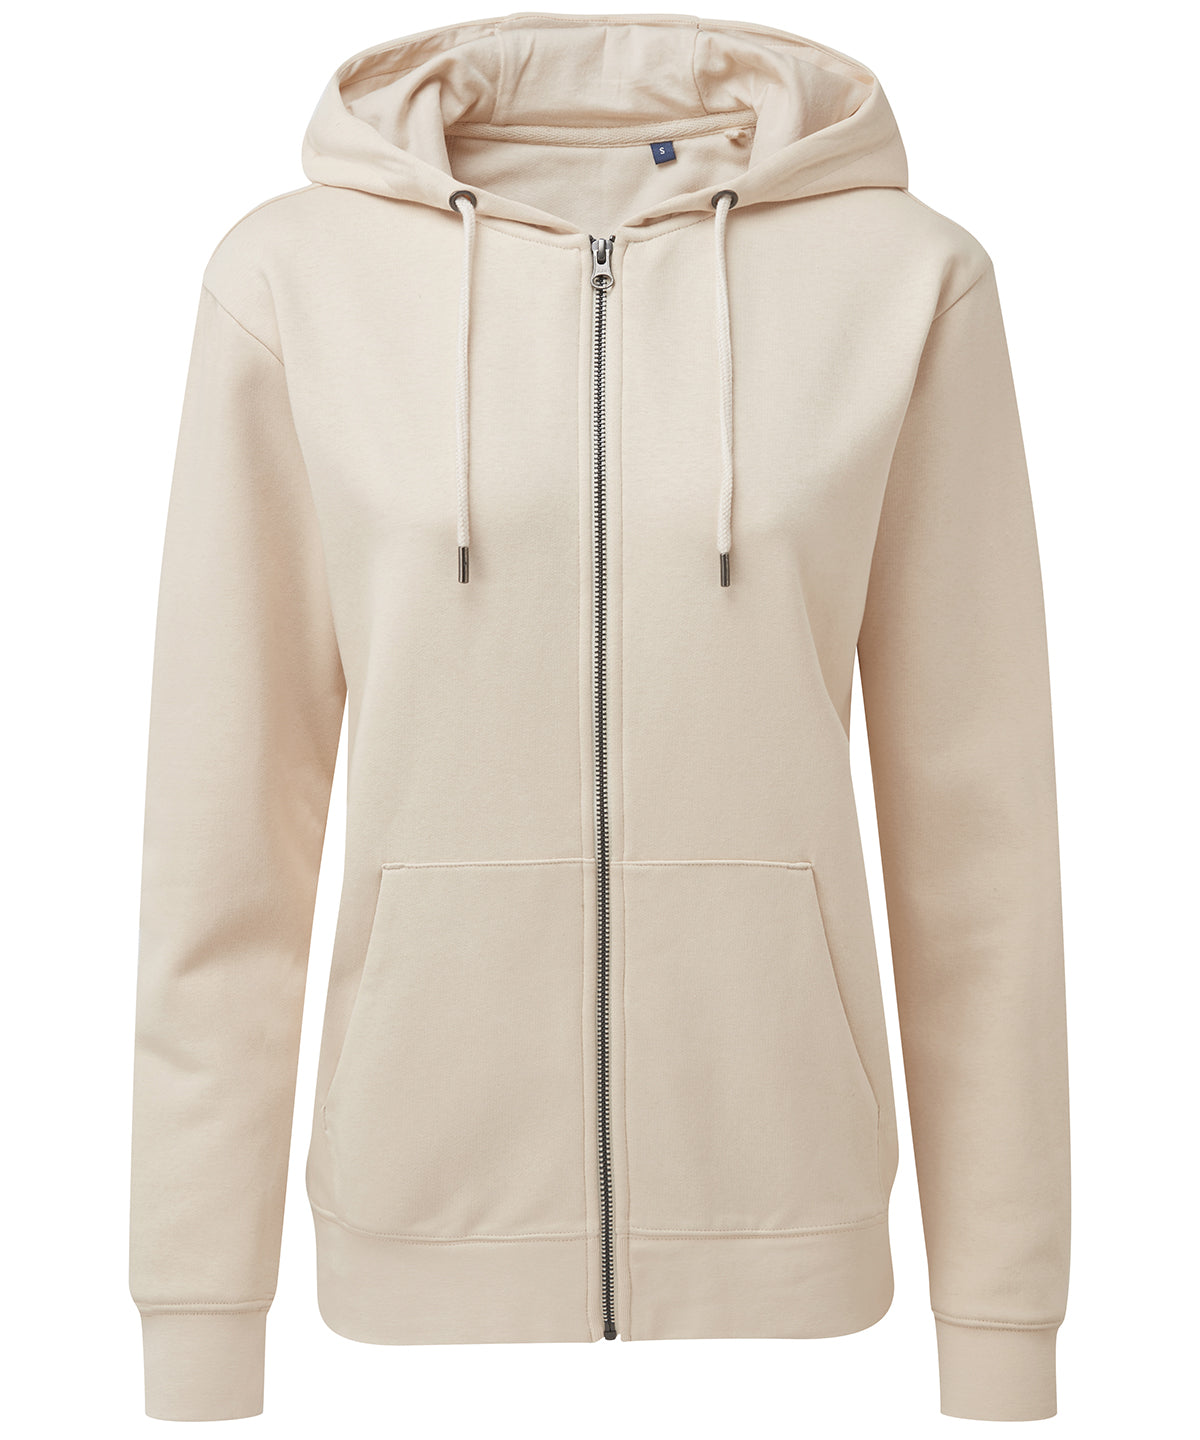 Personalised Hoodies - Turquoise Asquith & Fox Women's zip-through organic hoodie